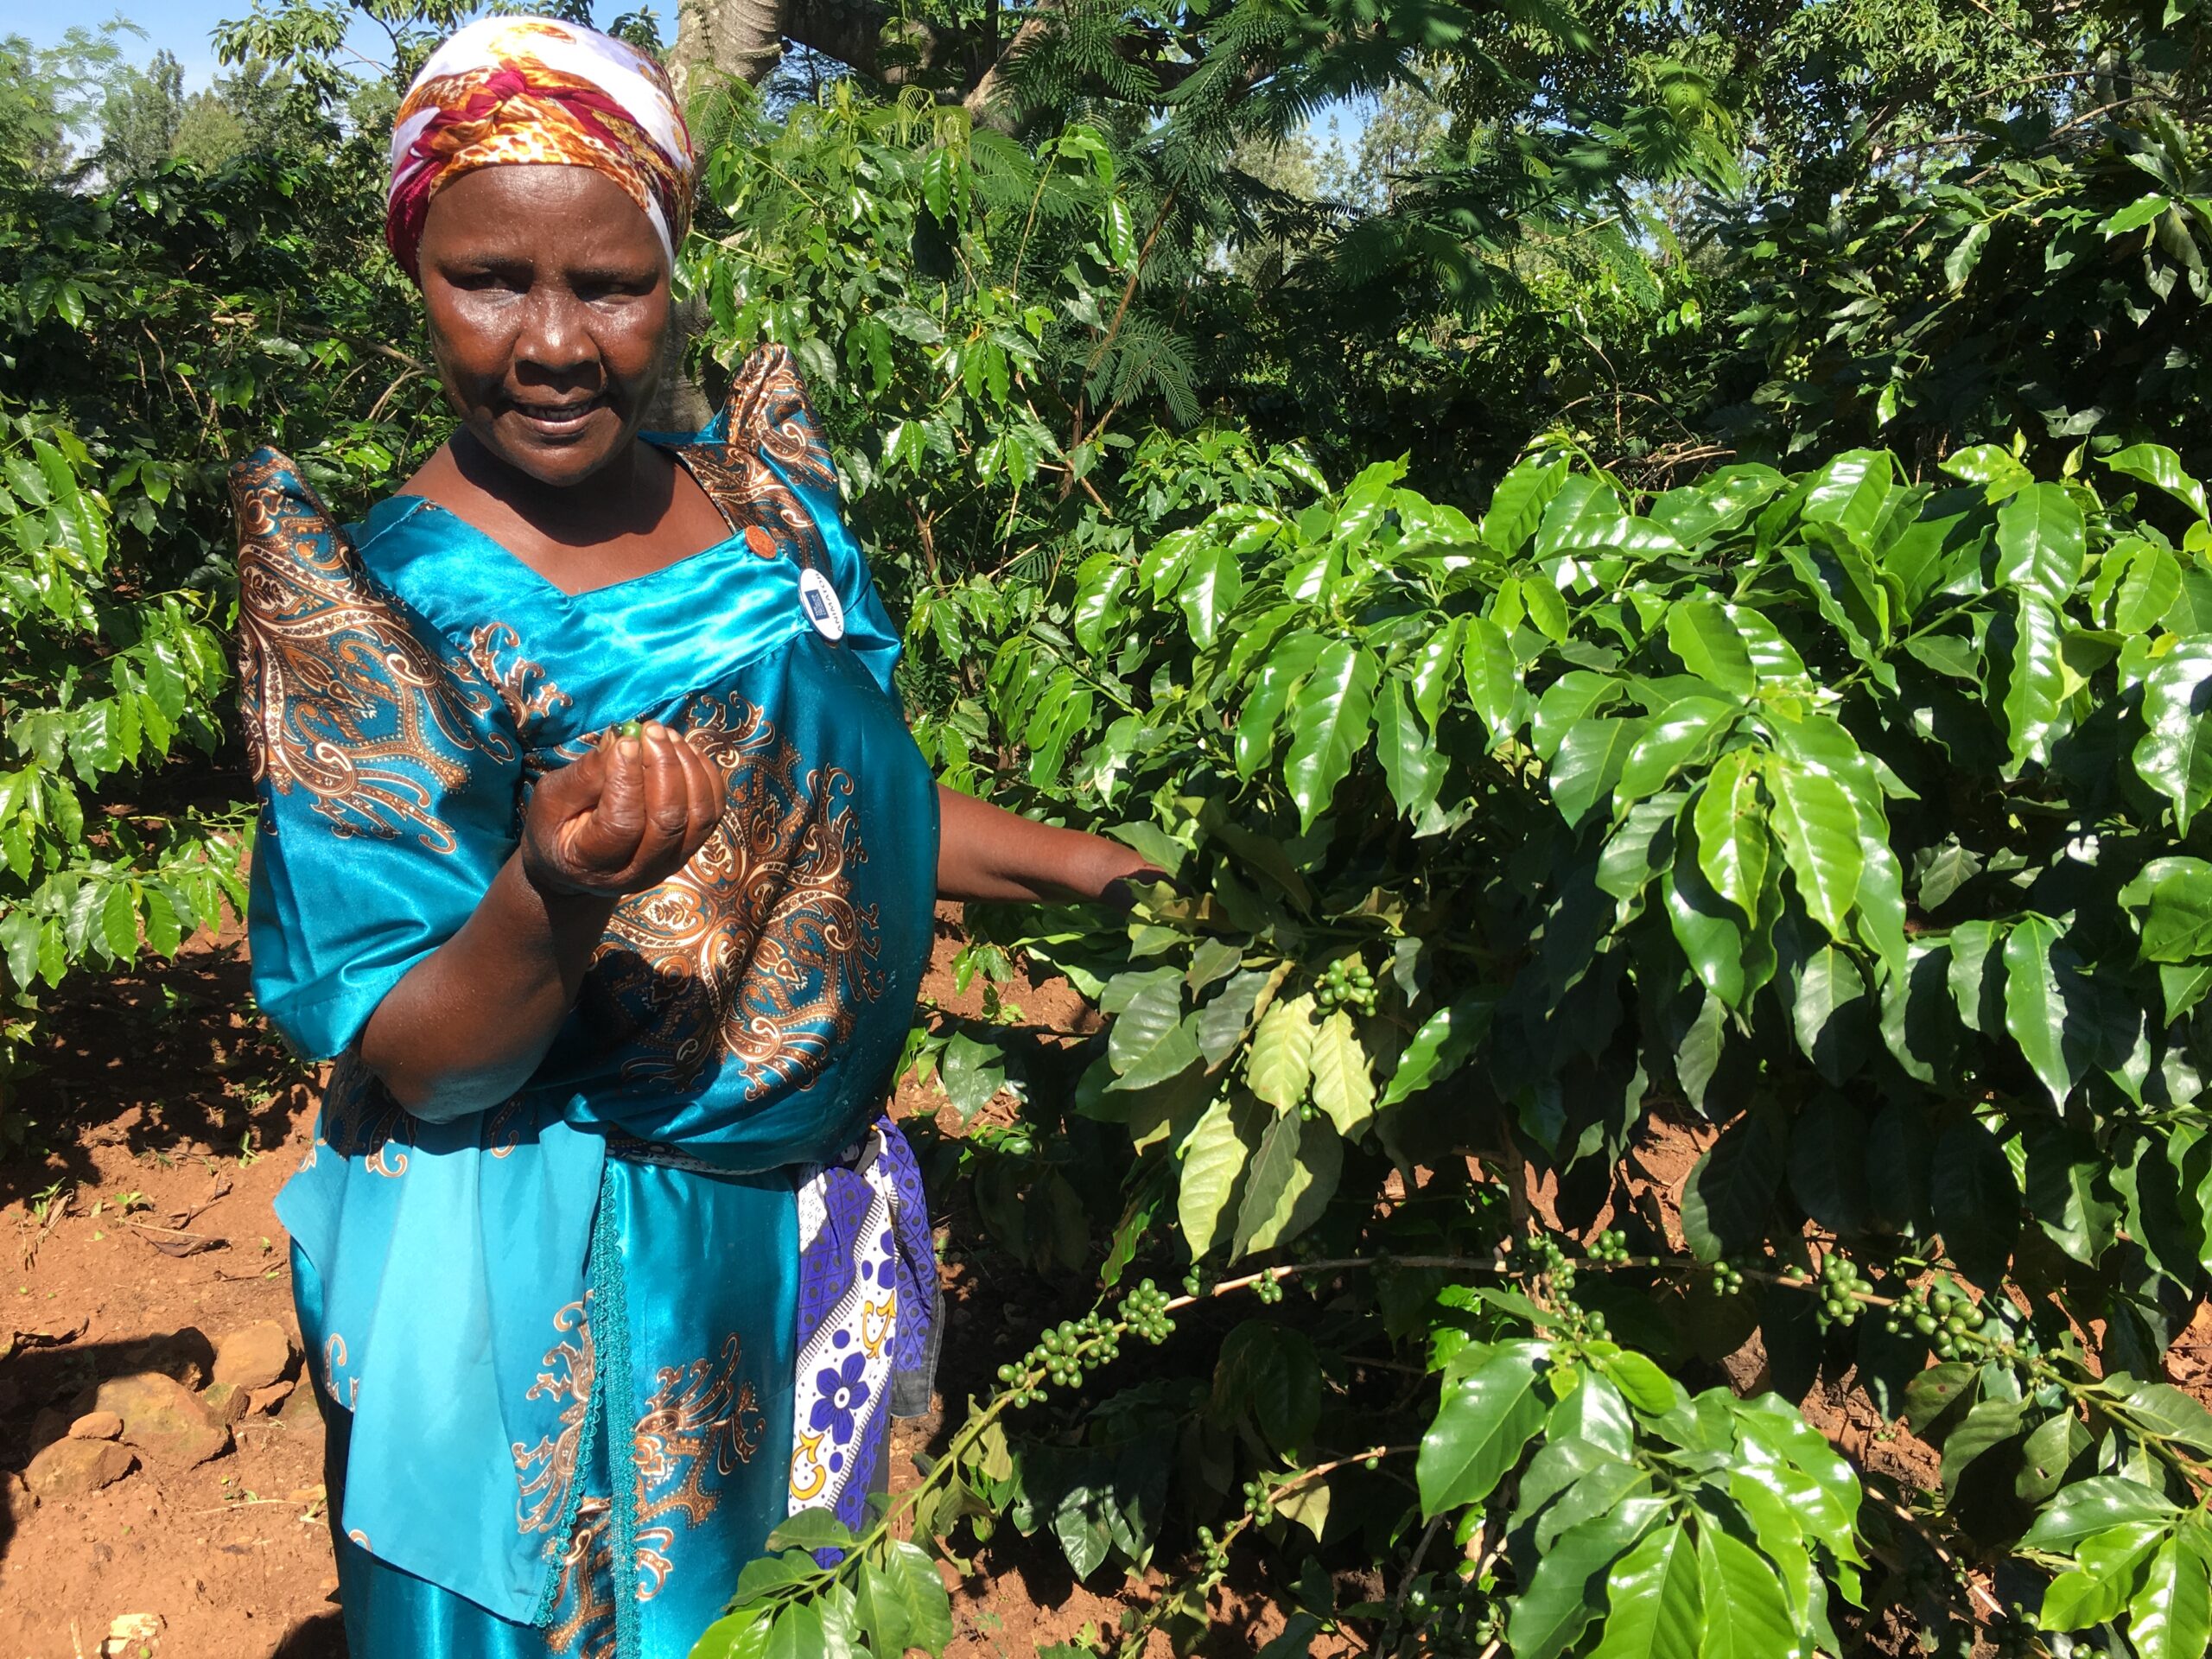 Uganda farmer field school promotes climate resilience